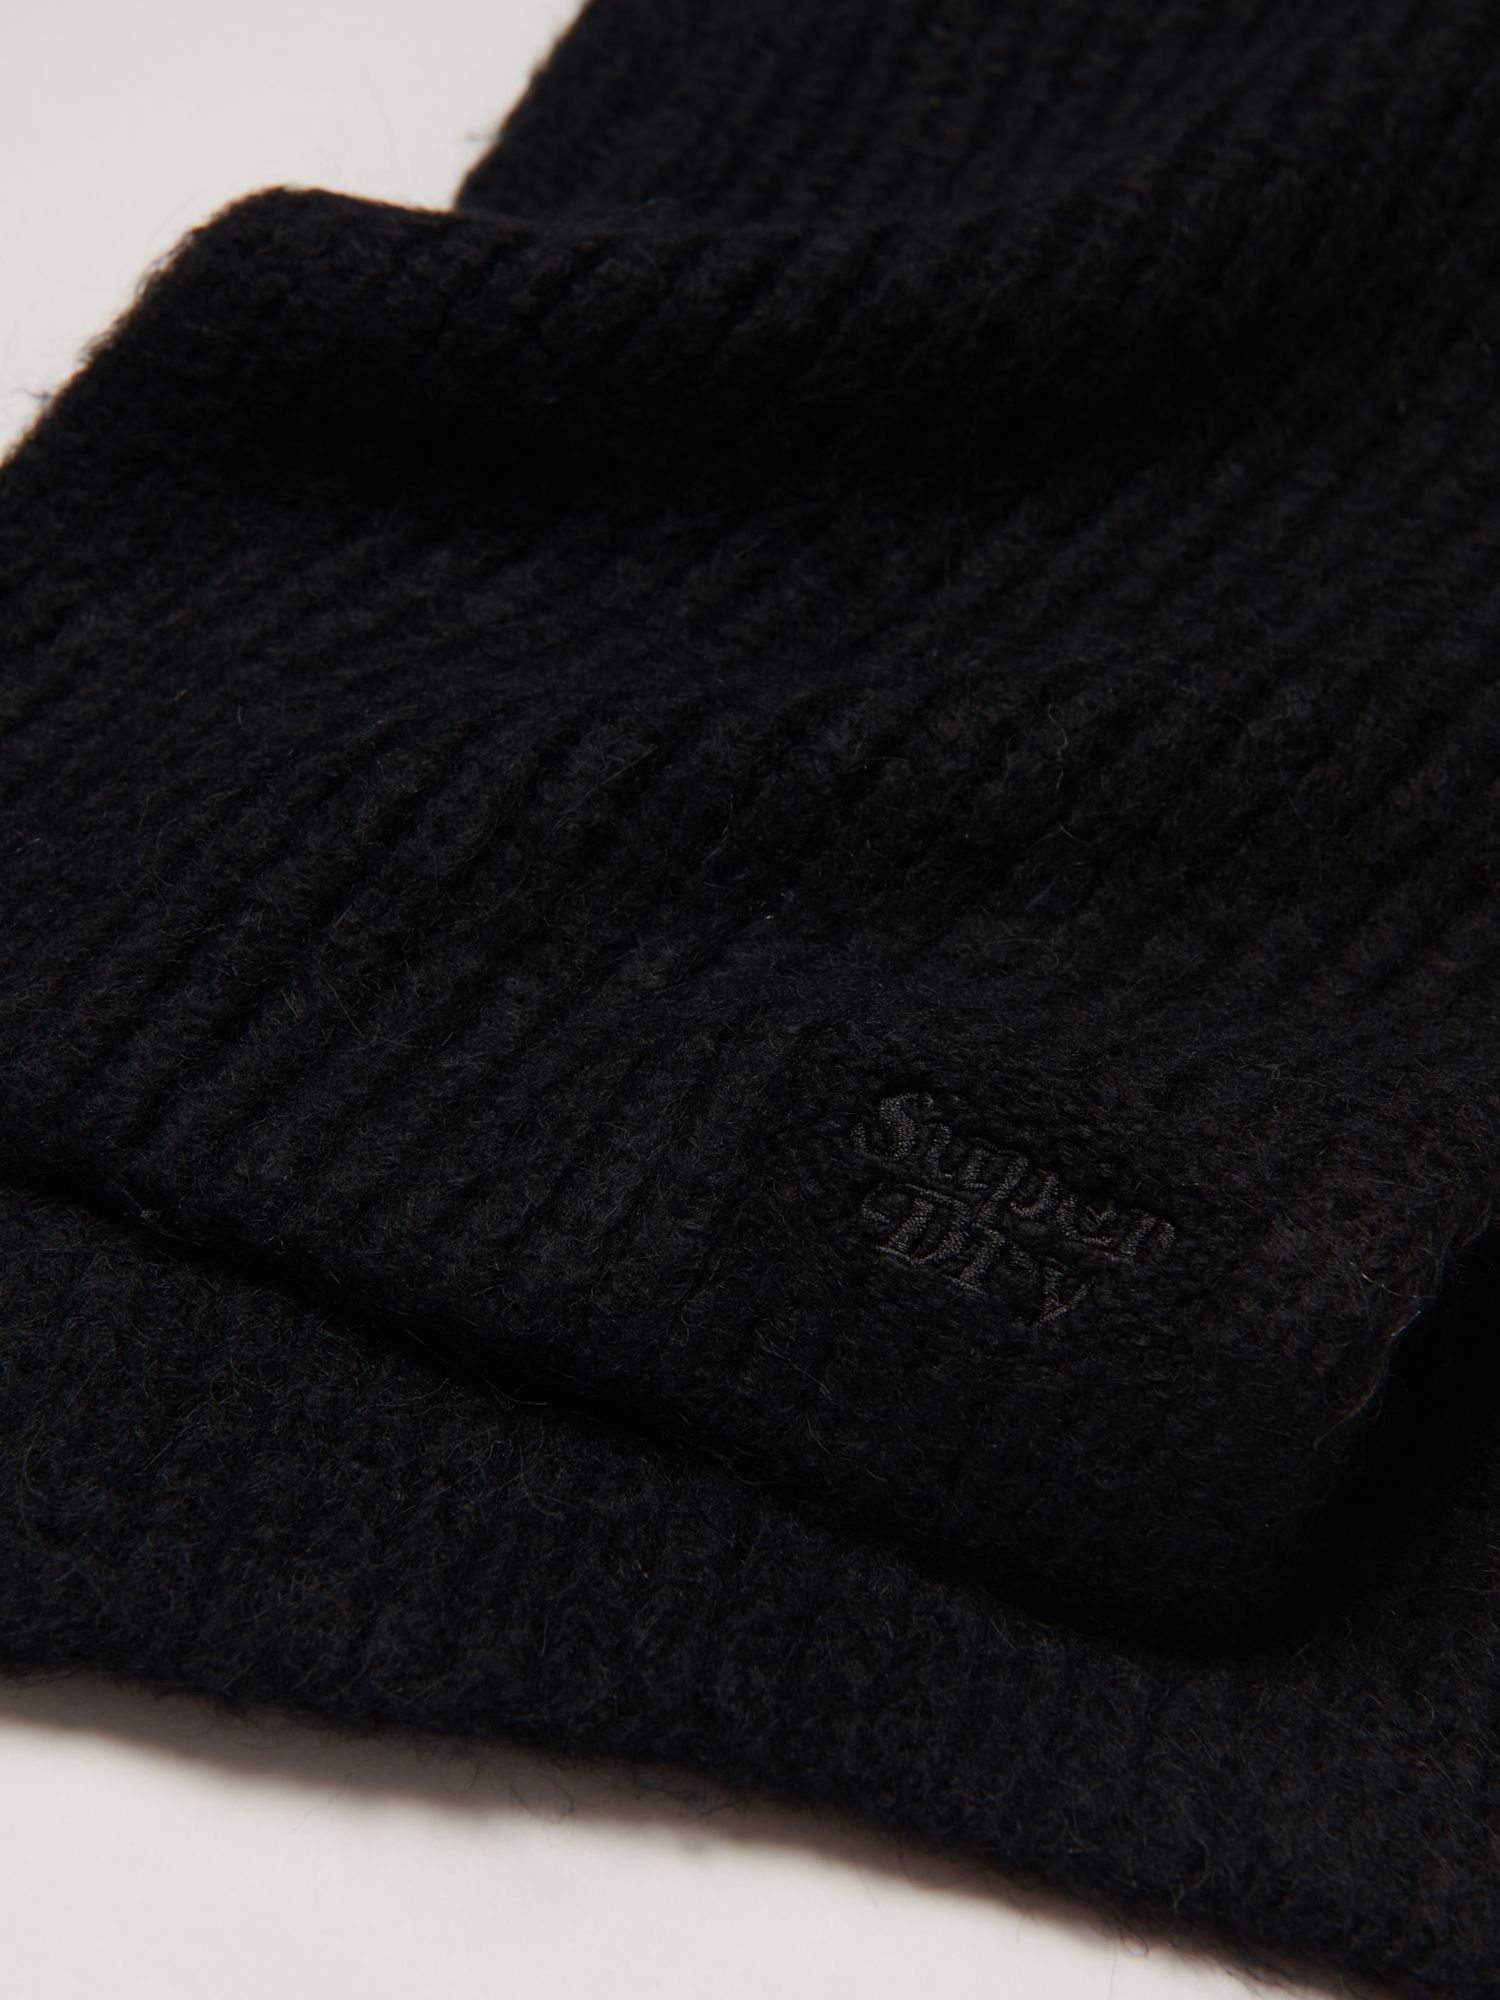 Superdry Ribbed Knit Wool Blend Scarf, Black at John Lewis & Partners